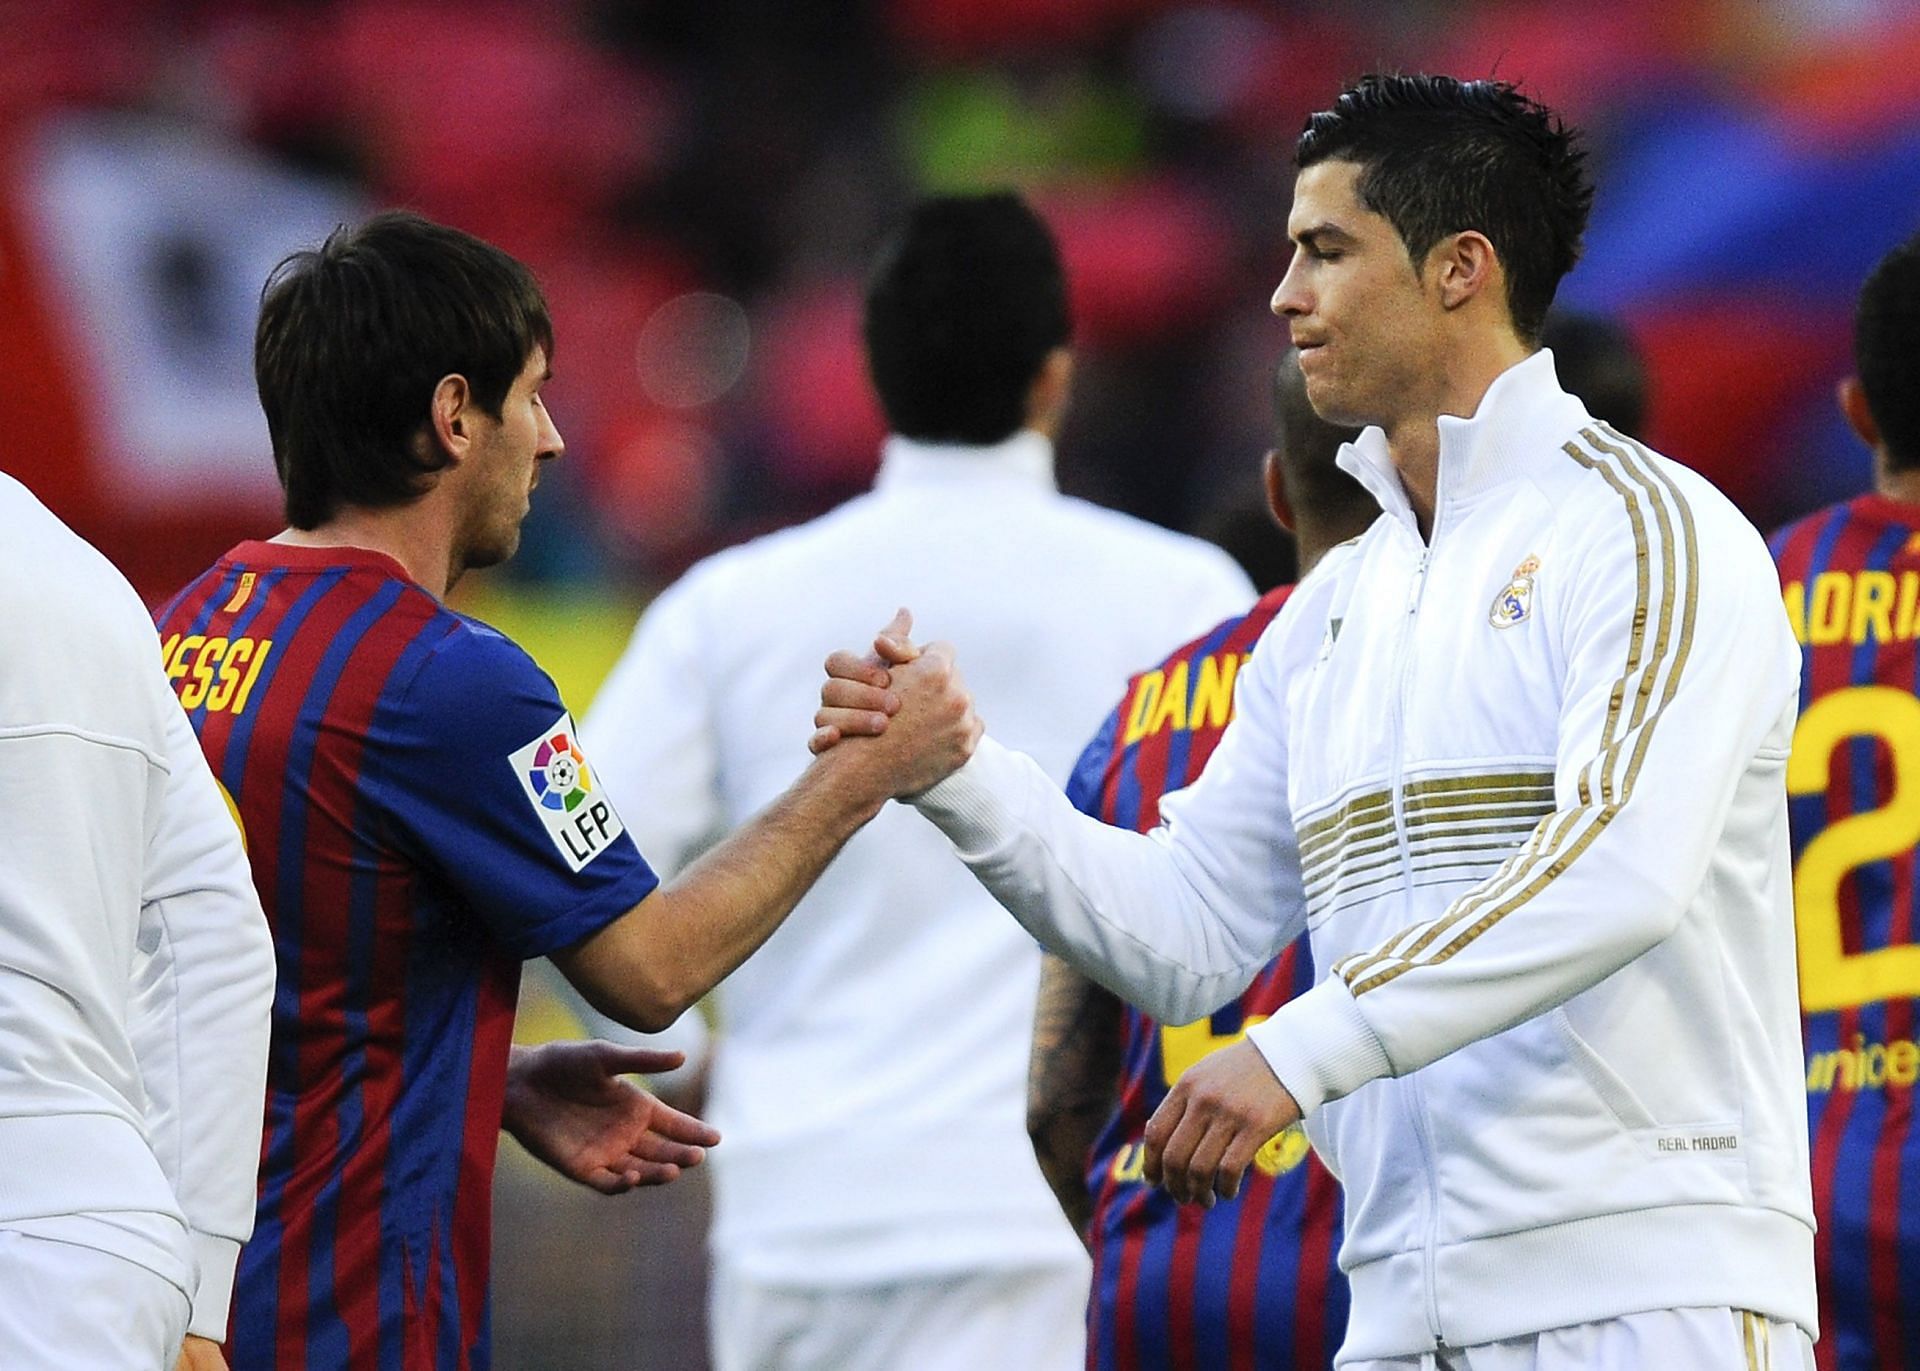 Lionel Messi and Cristiano Ronaldo shake hands before a LaLiga match in 2012